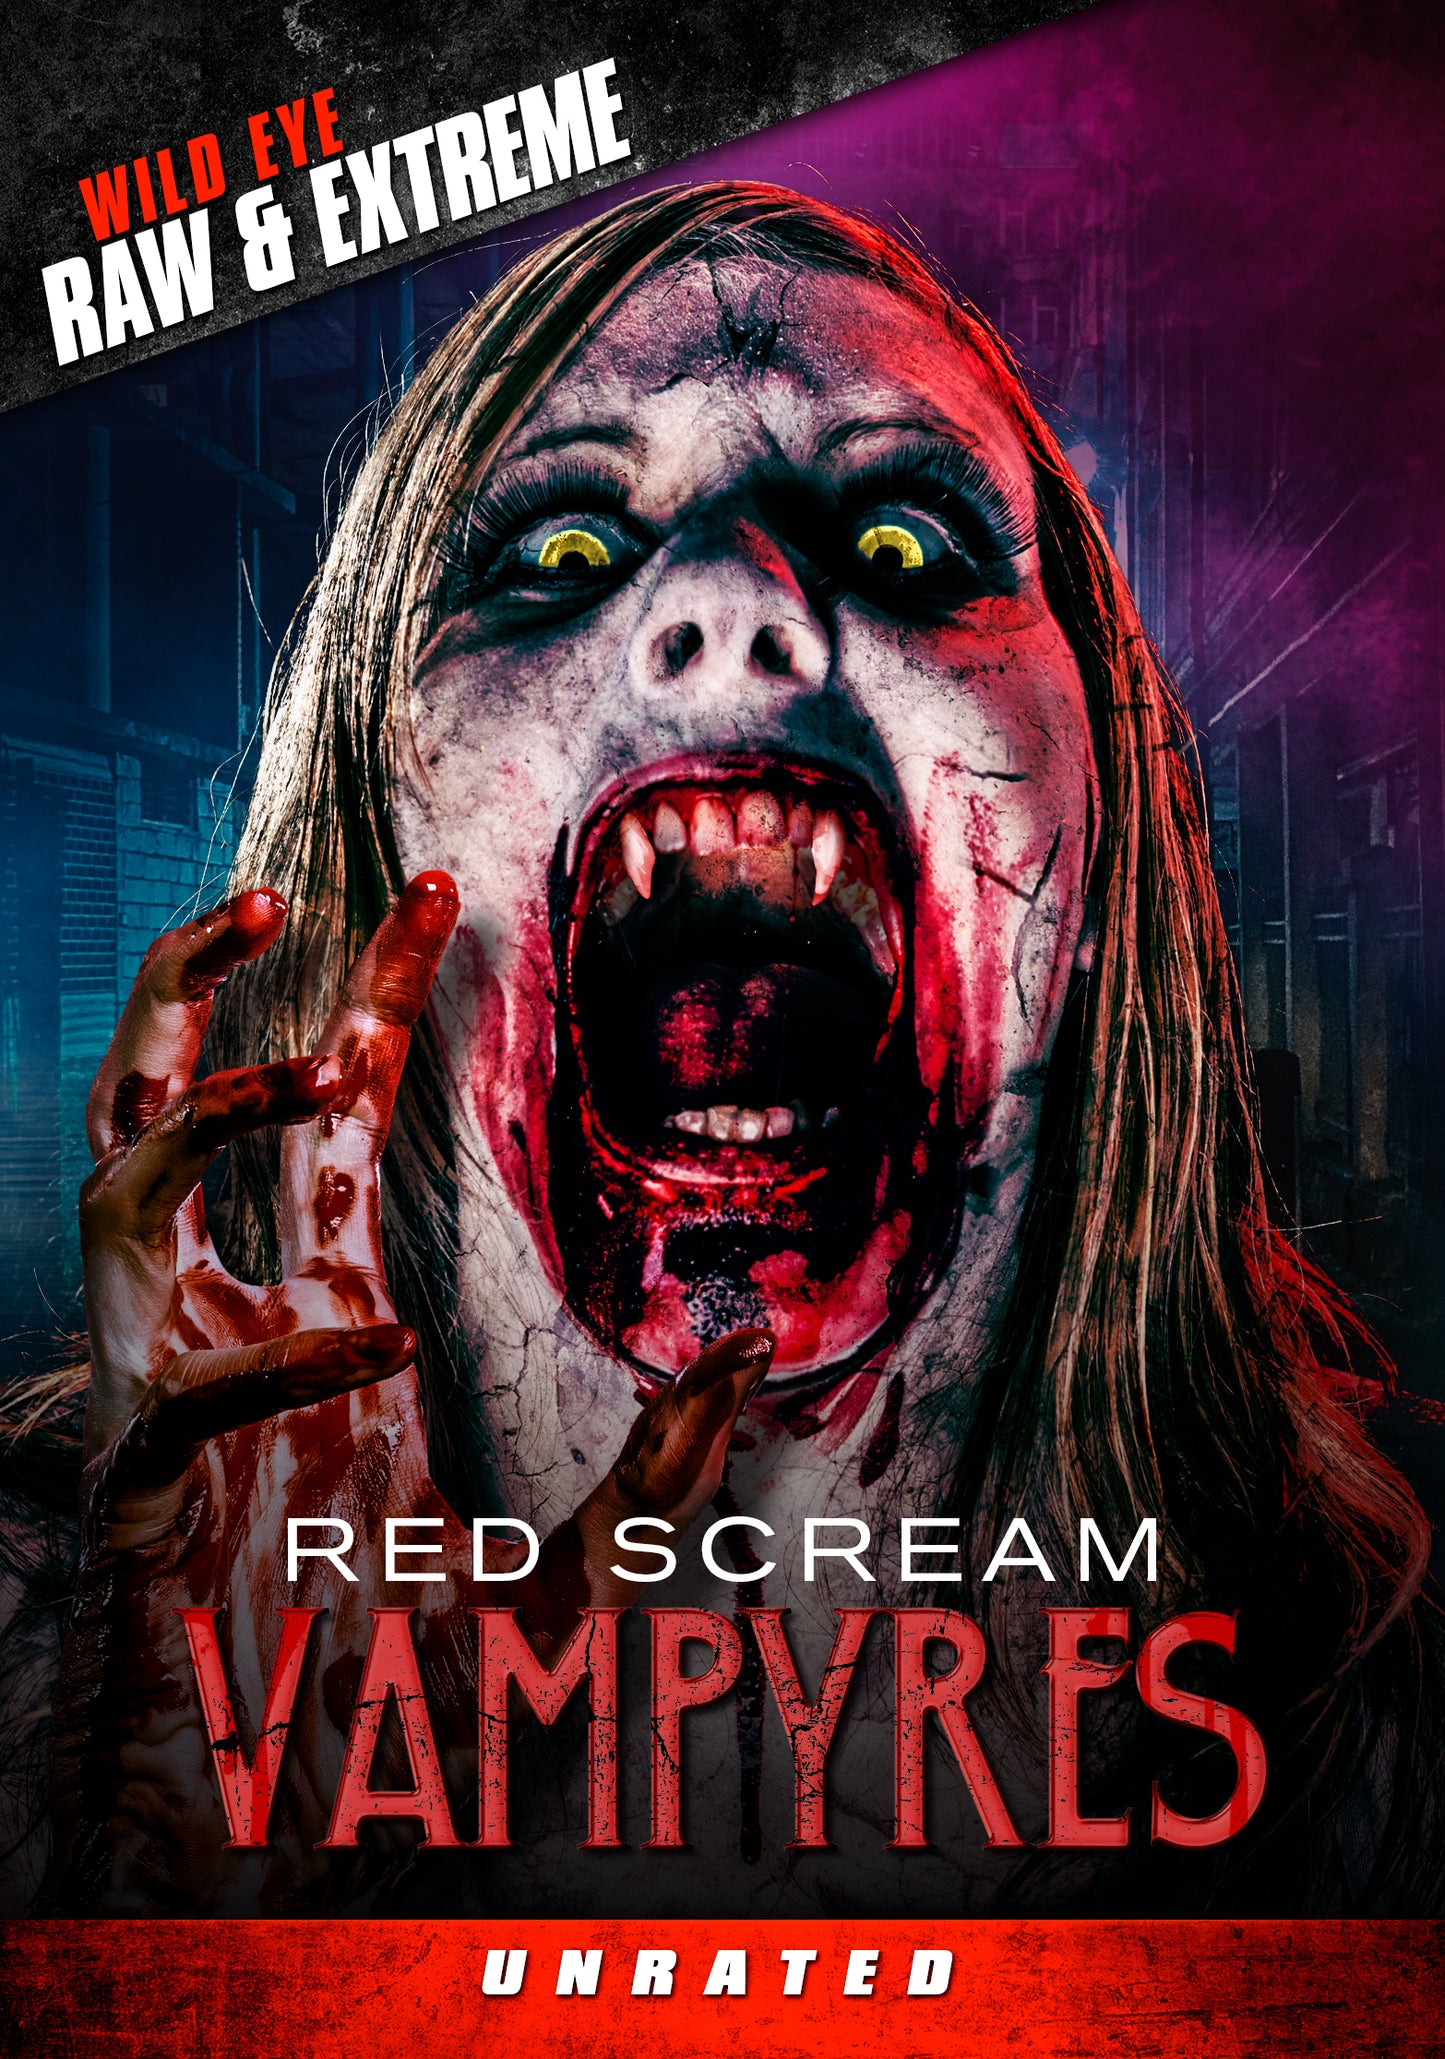 Red Scream Vampyres cover art